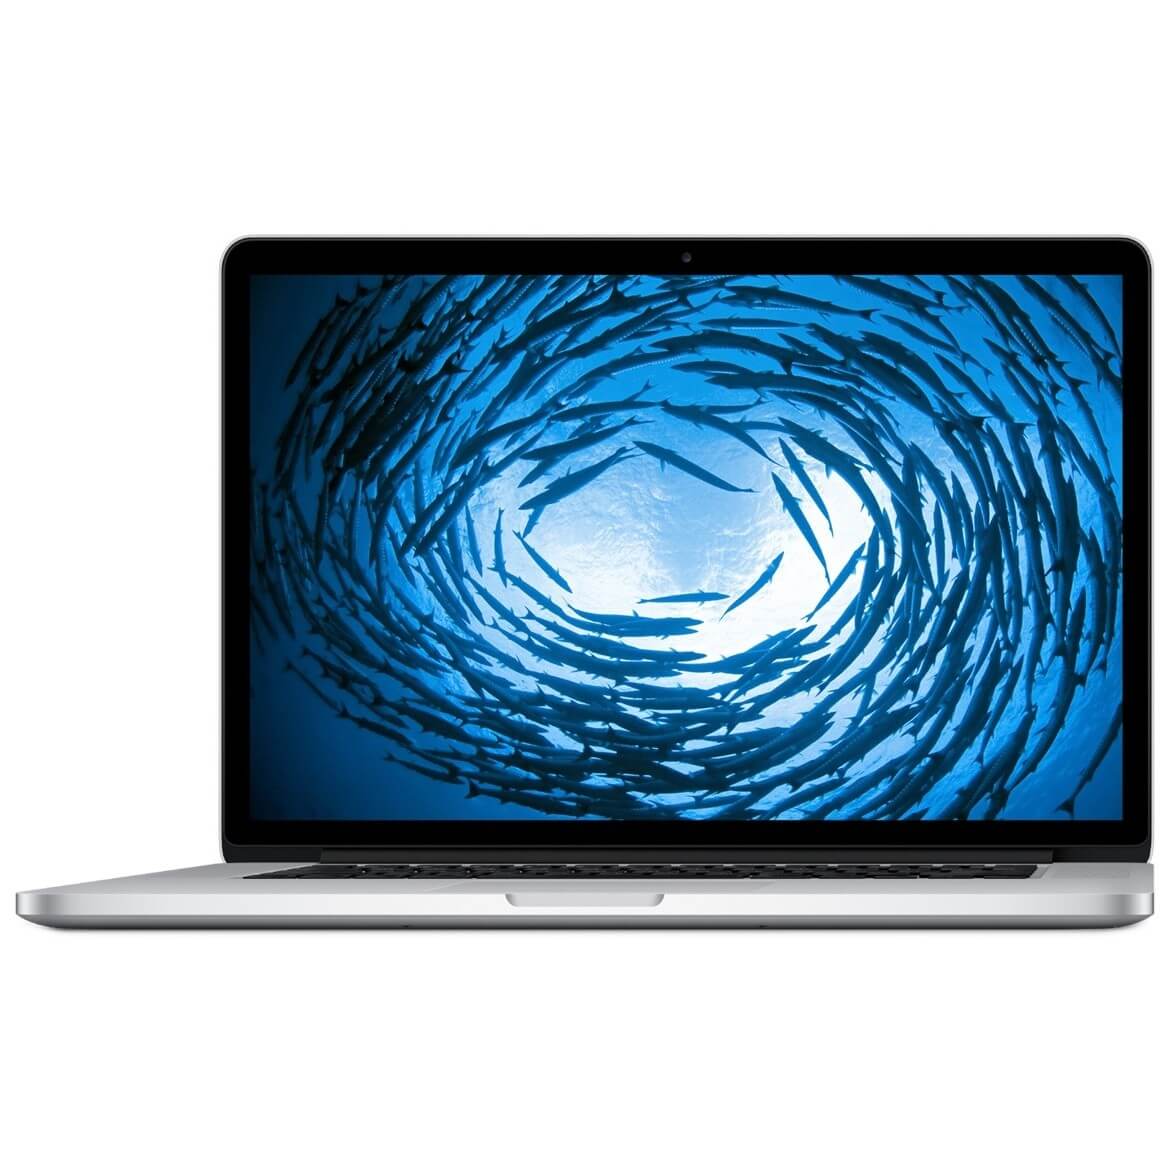 Apple MacBook Pro Retina 15 (MGXC2)